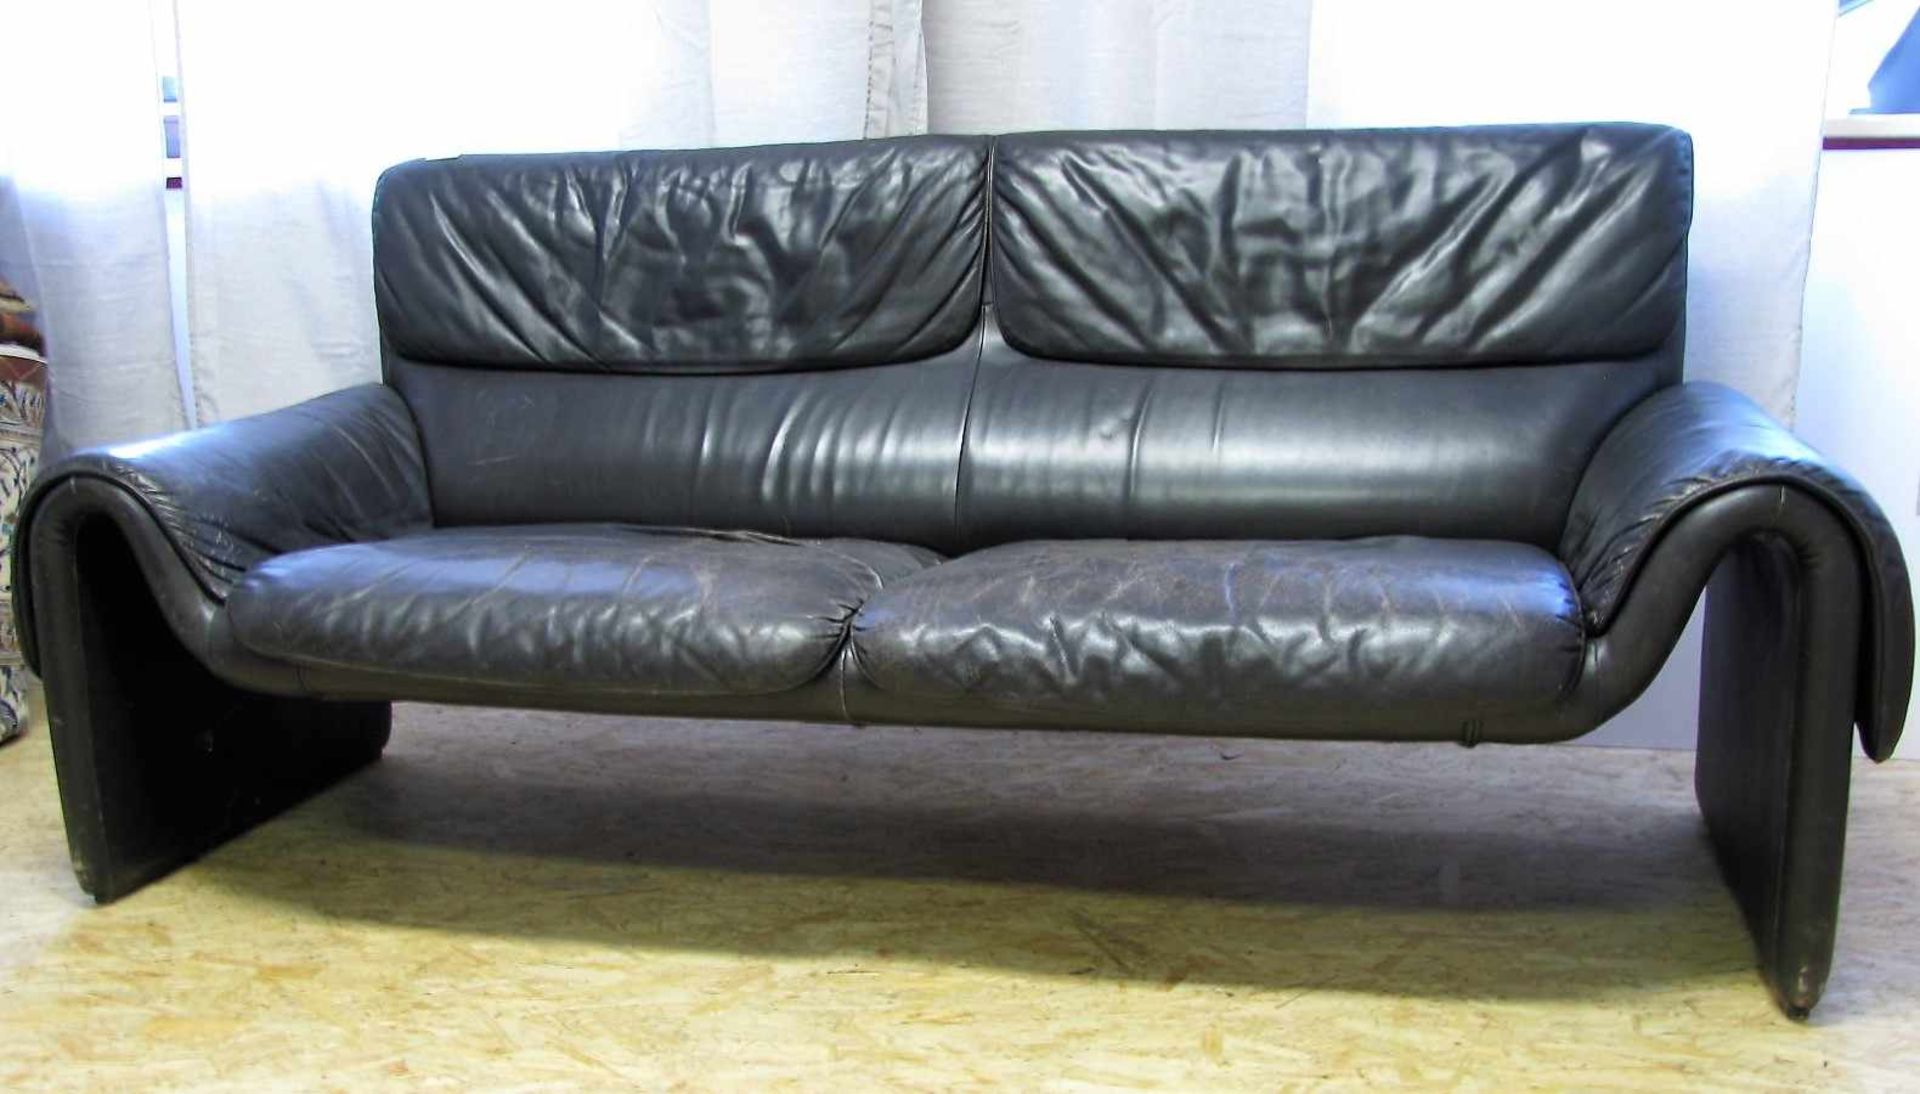 Designer-Sofa, De Sede, Modell DS 2011, Zweisitzer, schwarzes Leder, 81 x 190 x 80 cm.- - -19.00 % - Image 2 of 3